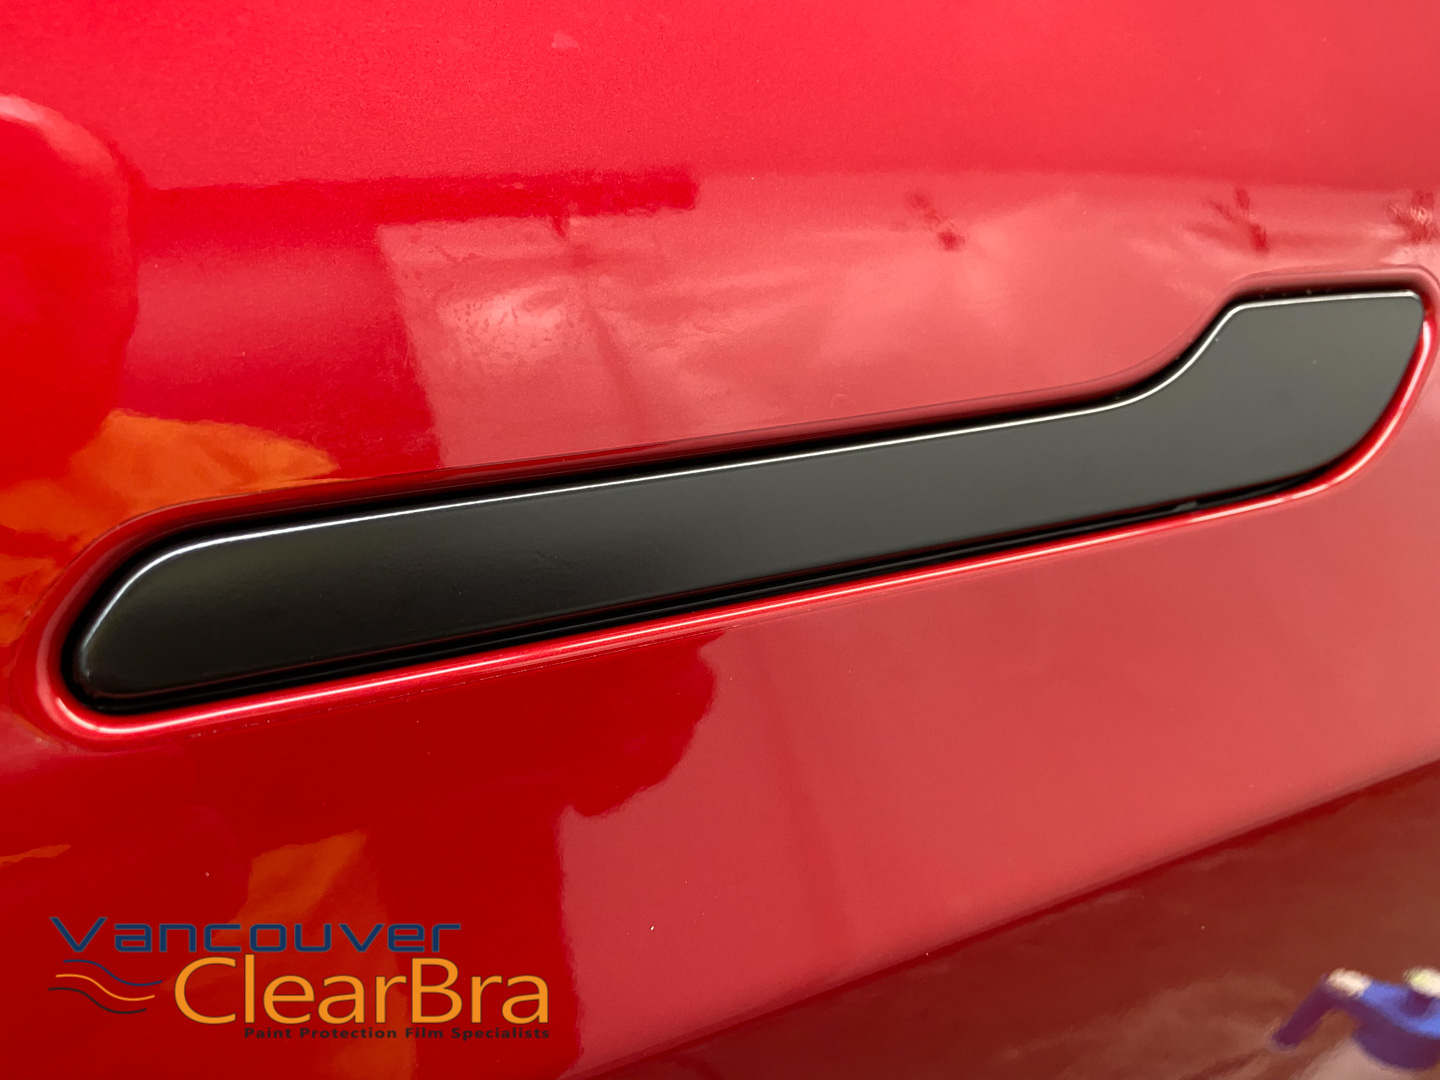 Tesla-clear-bra-paint-protection-film-Vancouver-ClearBra-12.jpg